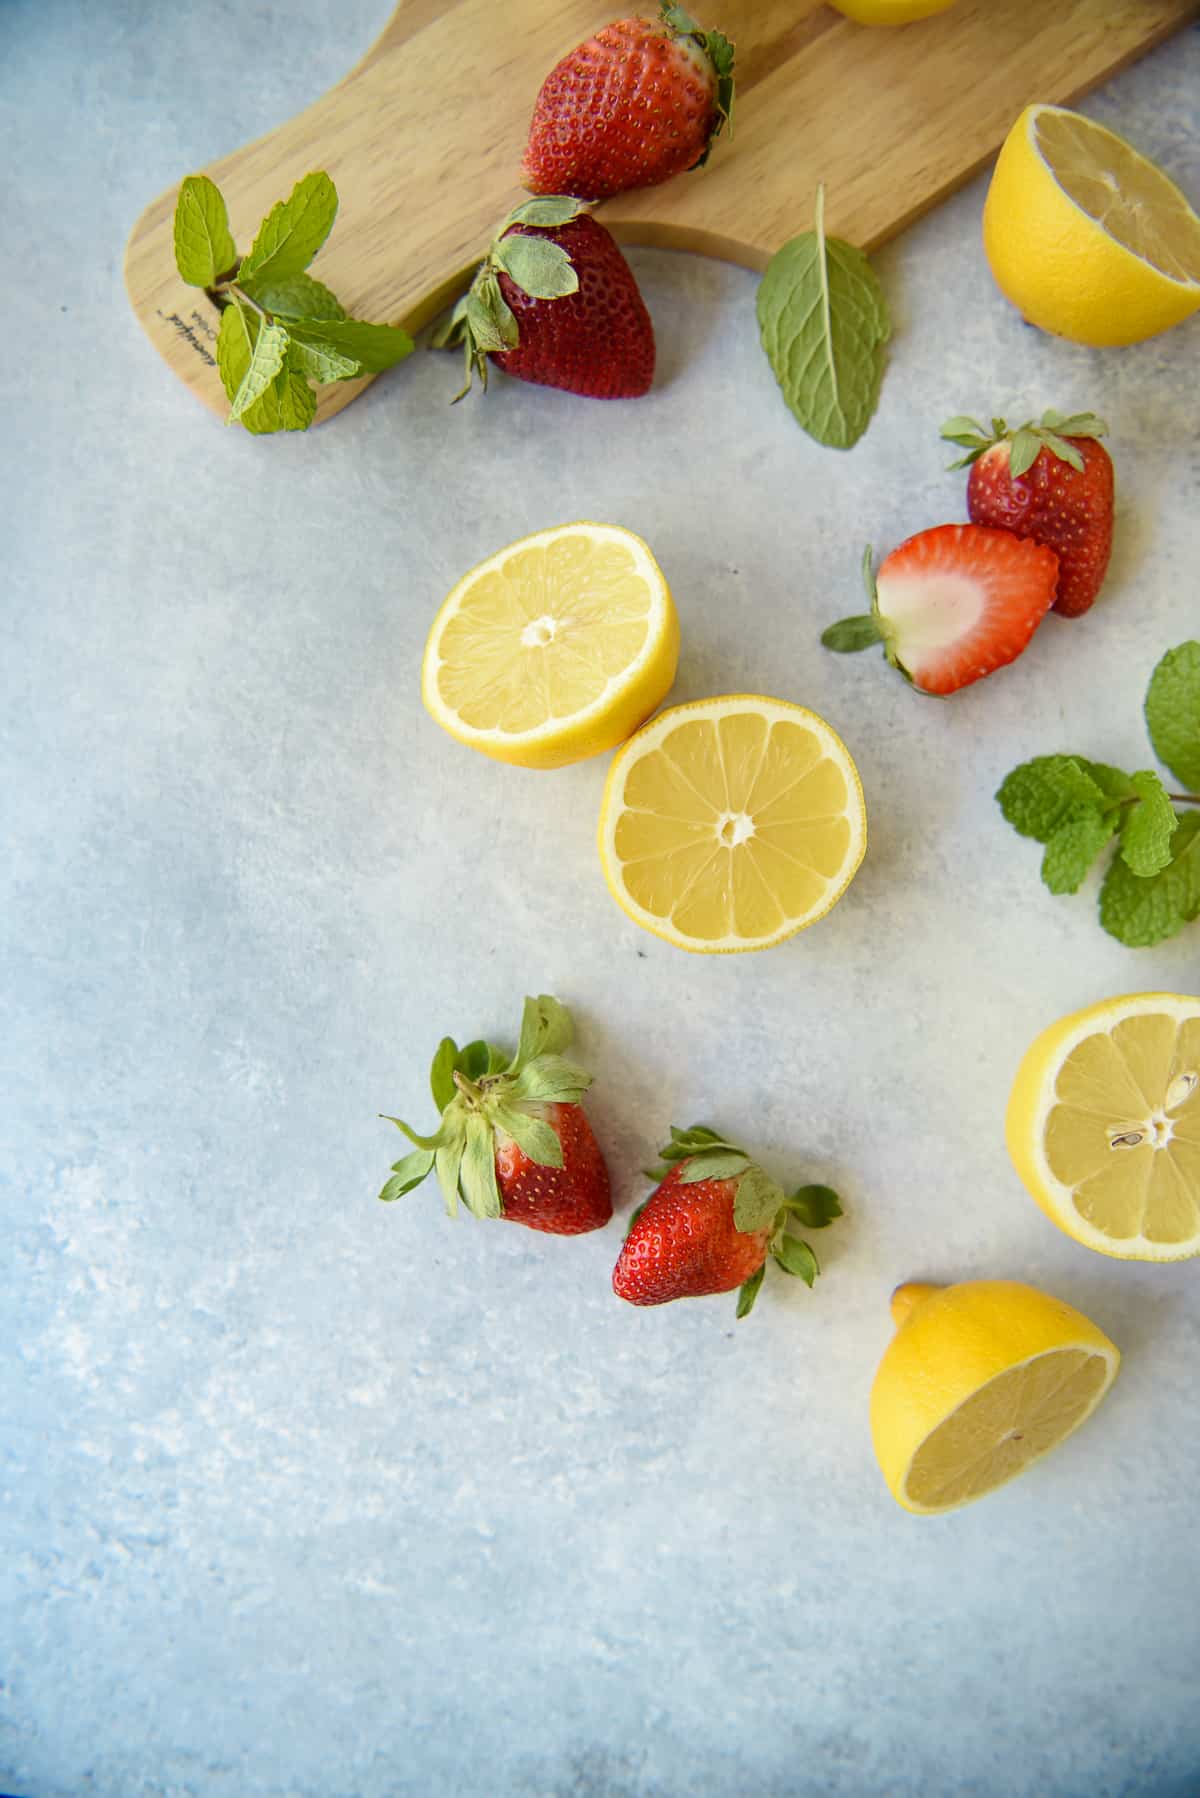 Strawberry lemonade recipe ingredients